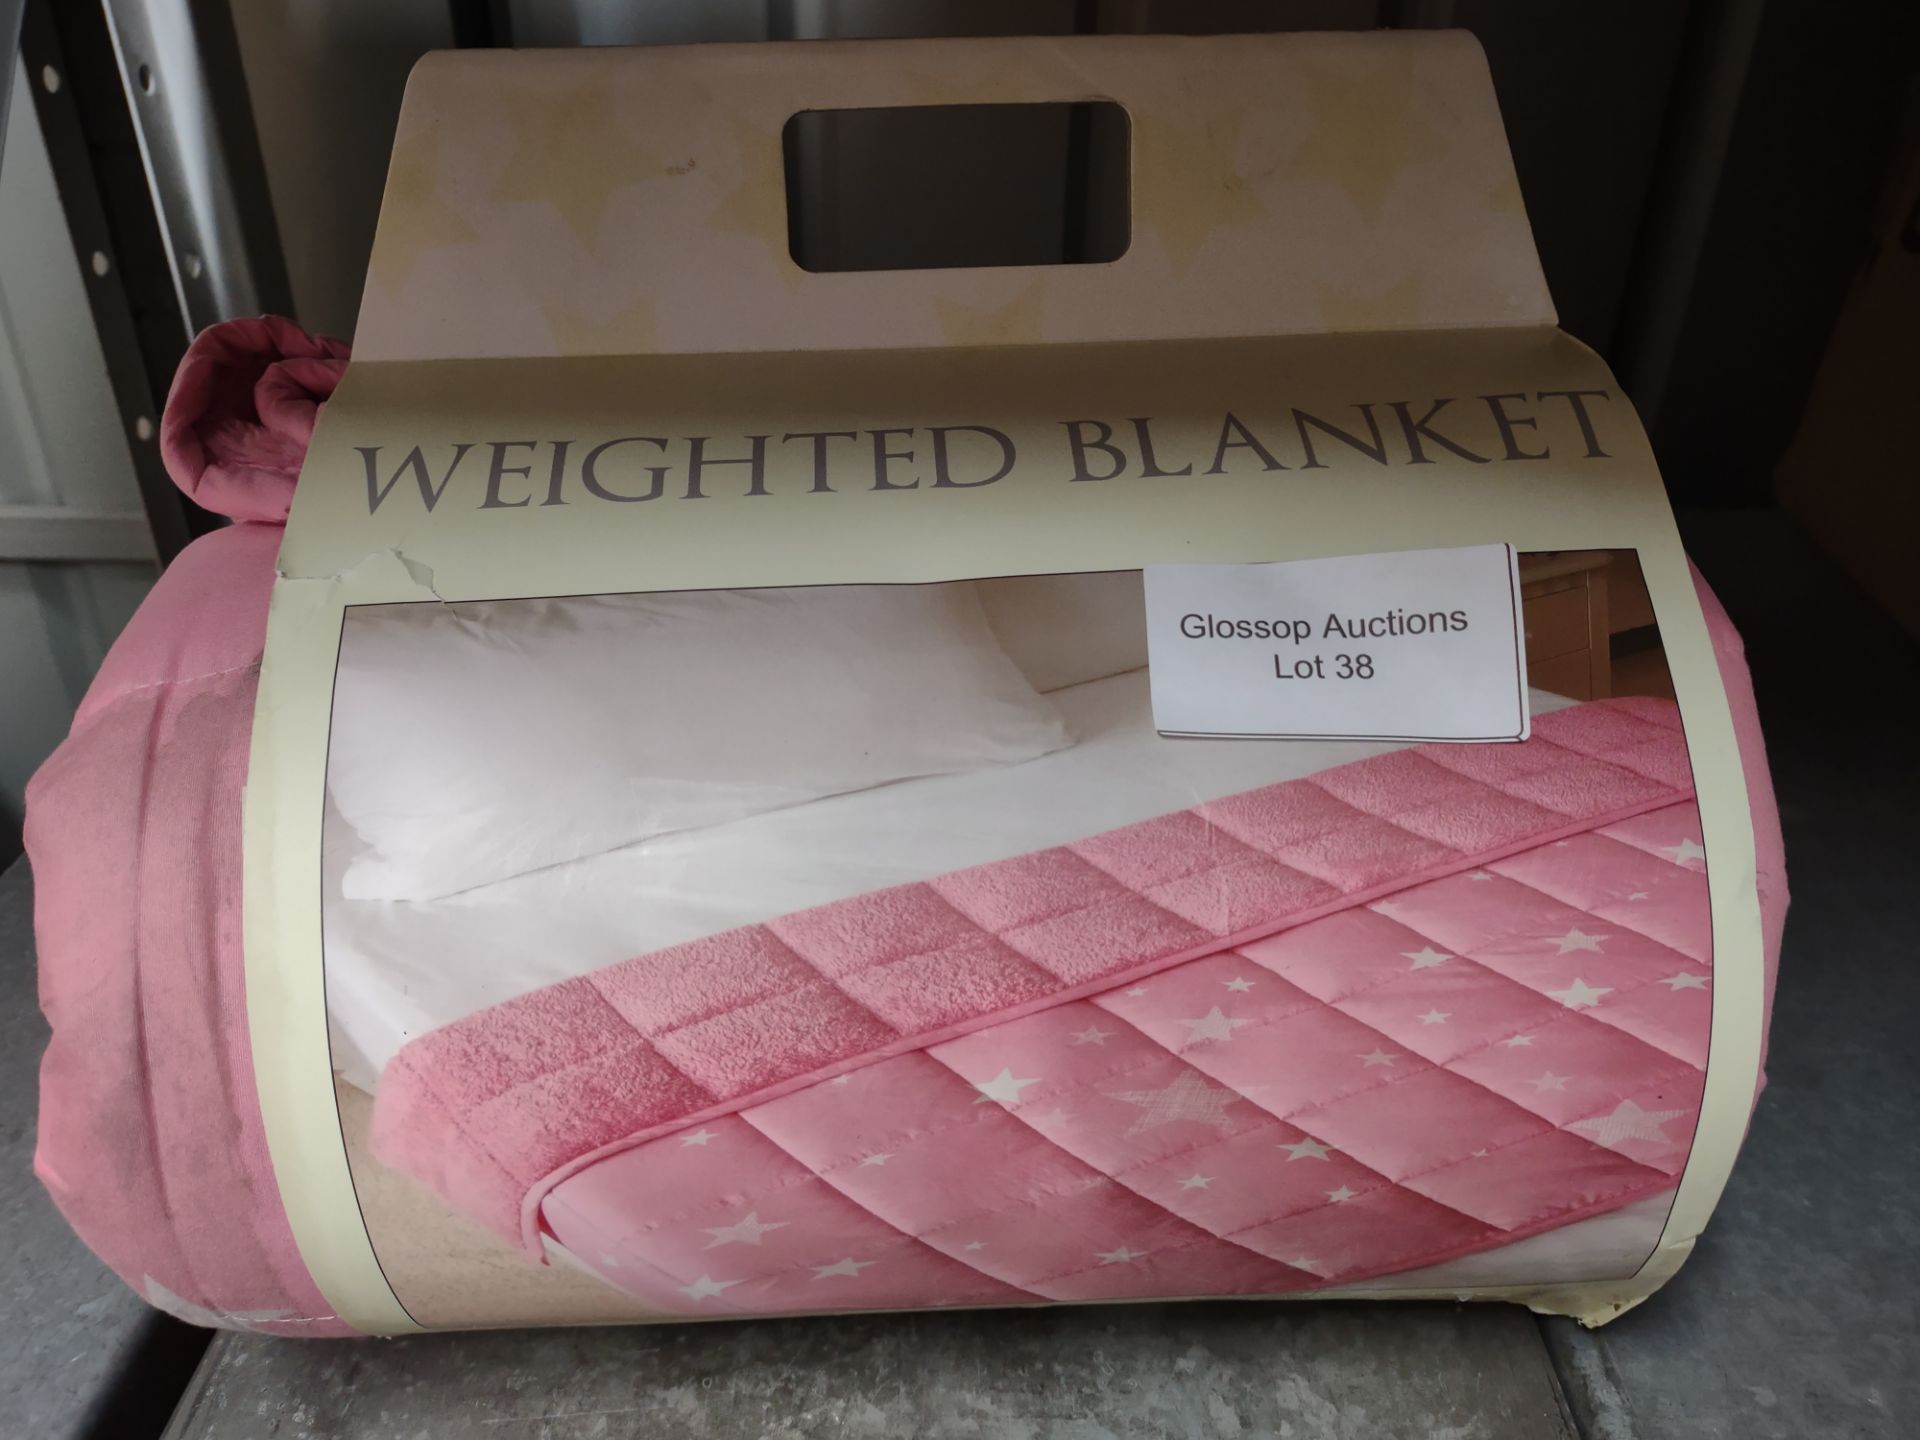 Dreamscene Star Weighted Blanket for Kids, Blush Pink, 100 x 150cm - 3kg. RRP £19.99 - Grade U